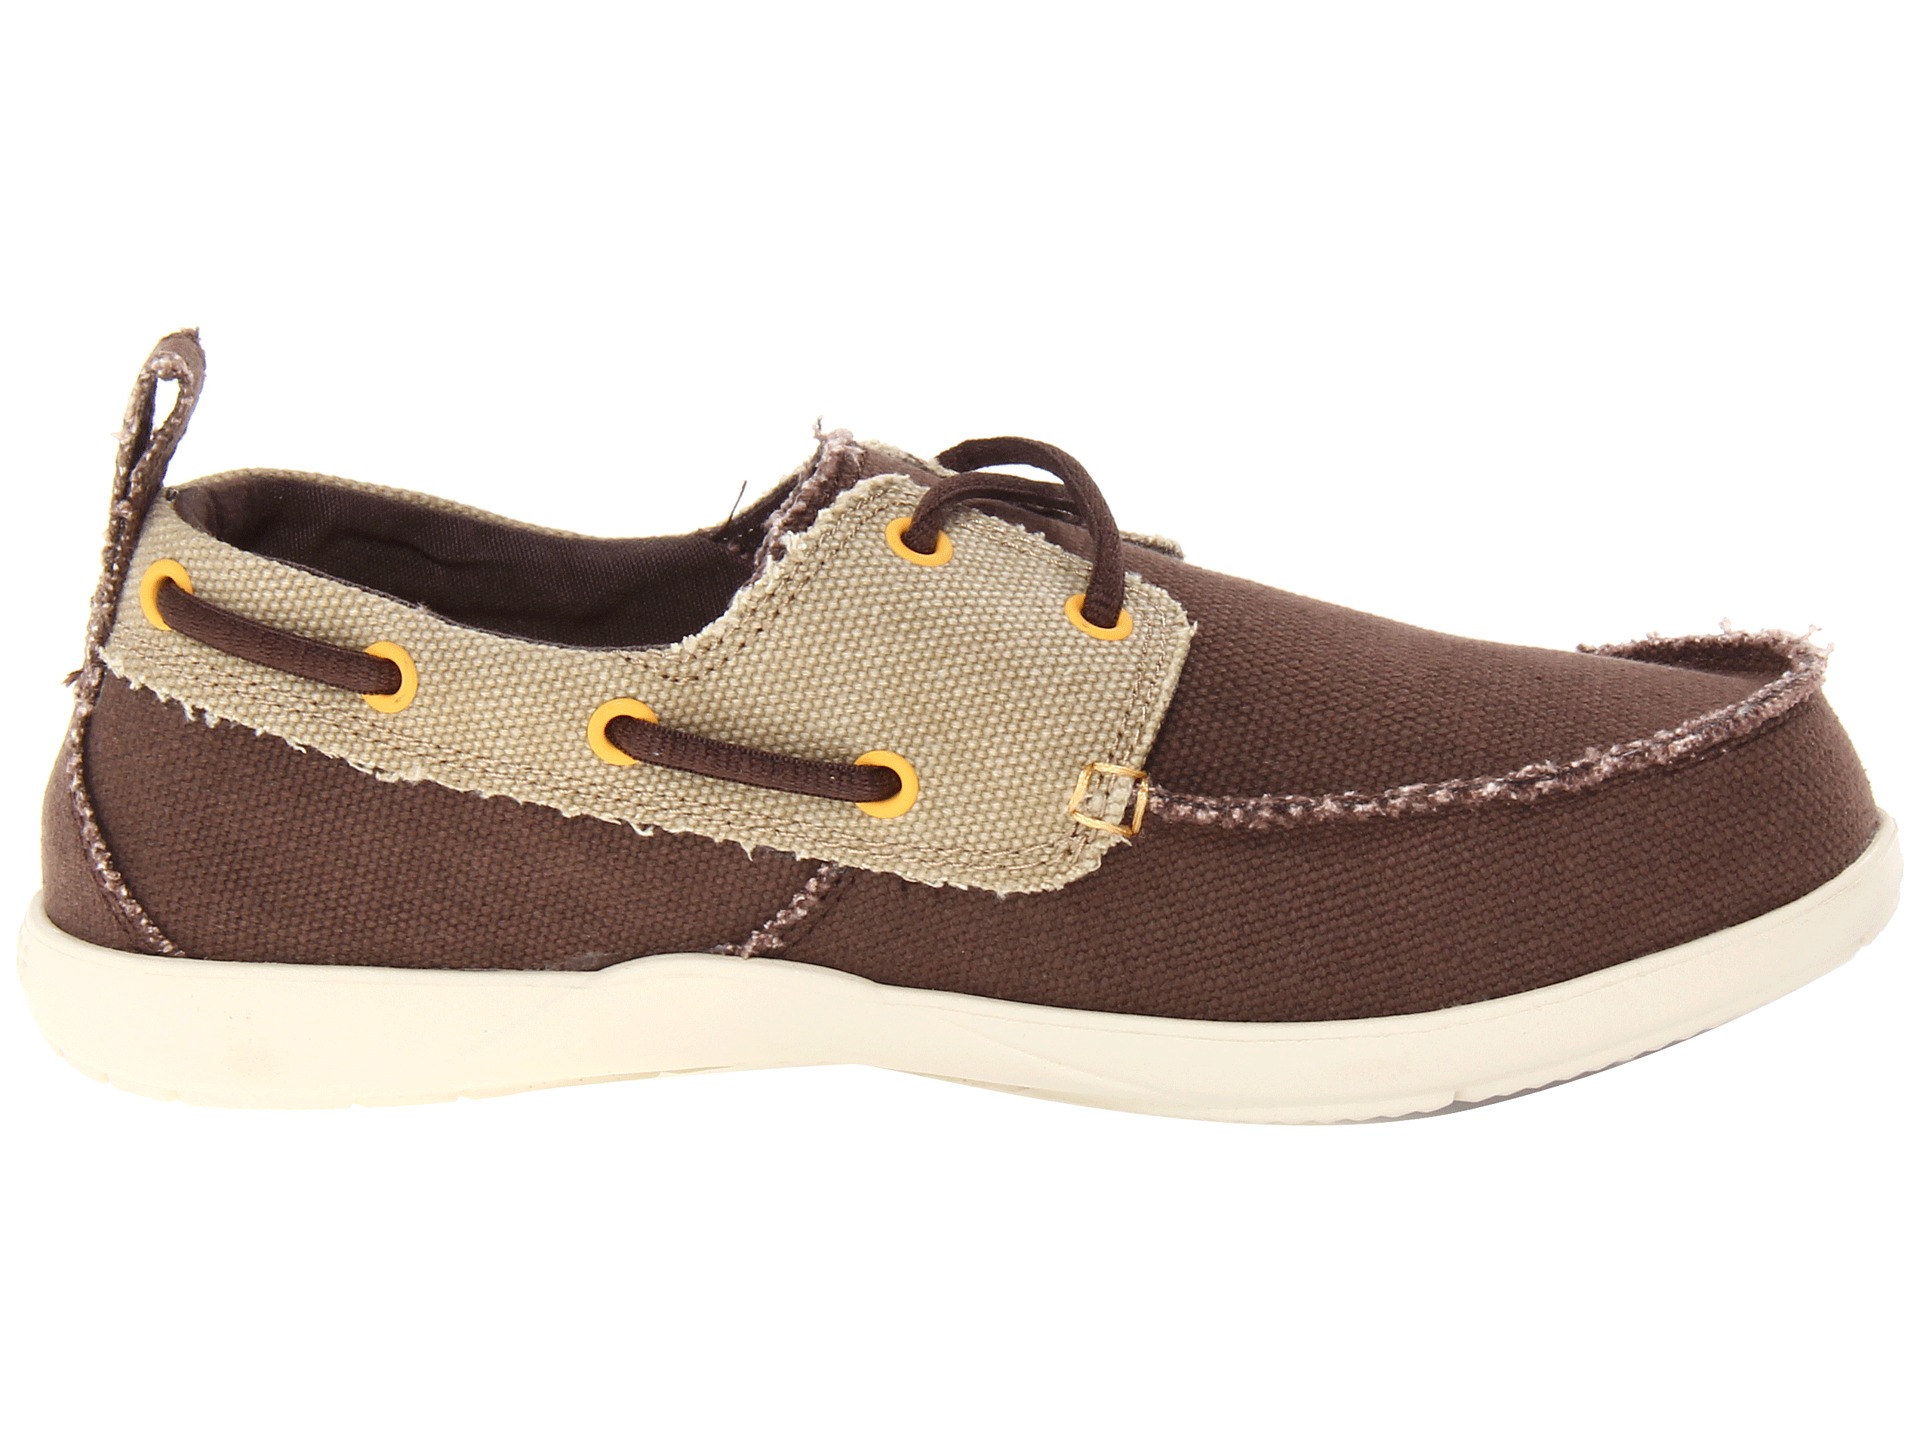 Crocs Walu Canvas Deck Shoe | Shipped Free at Zappos